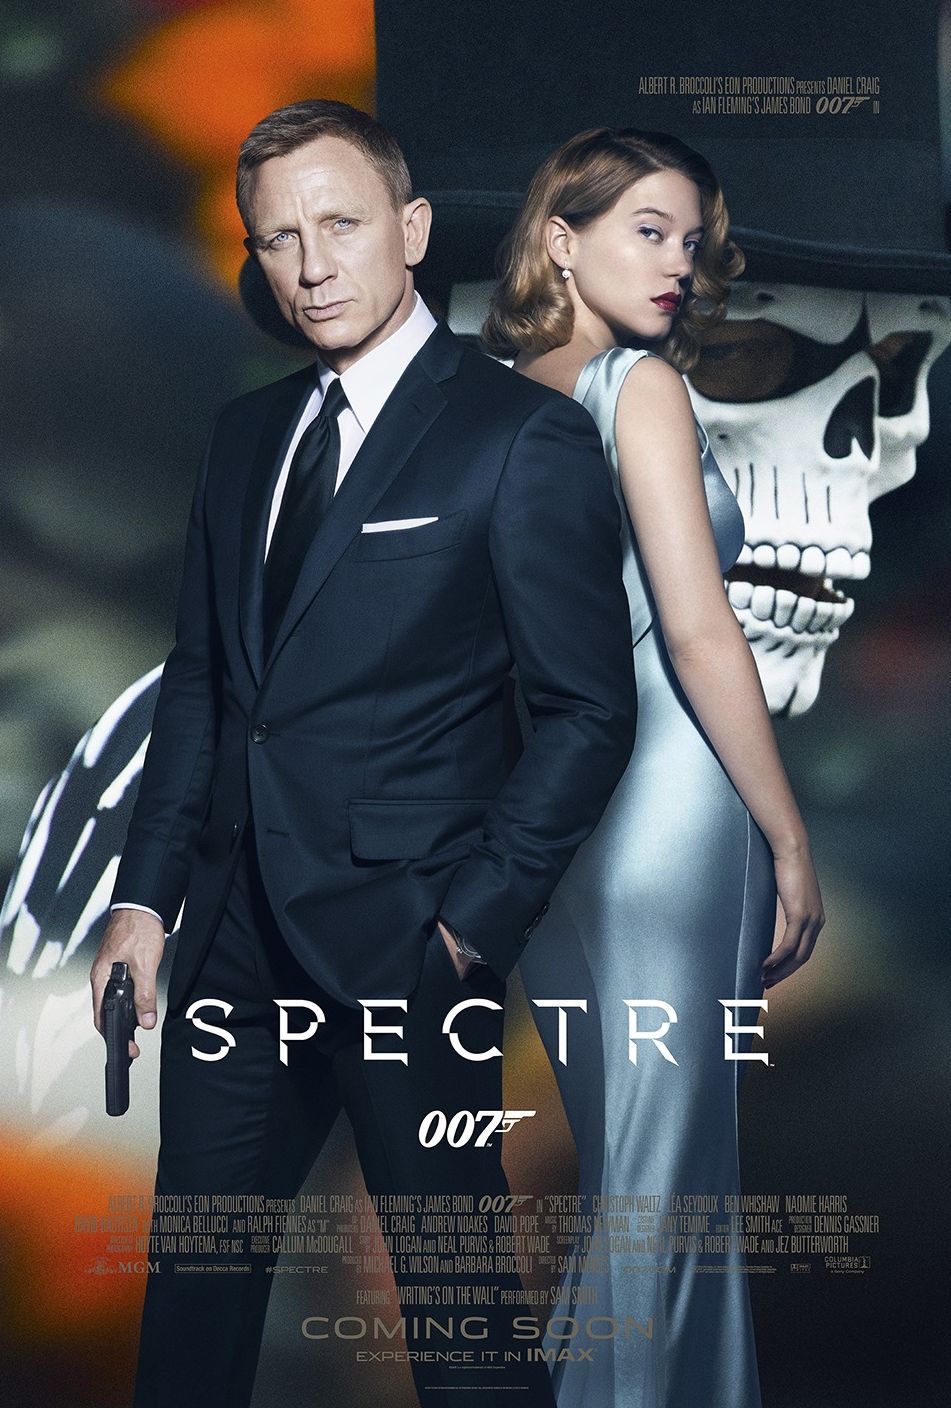 Bond Spectre Skull Poster with Daniel Craig and Léa Seydoux